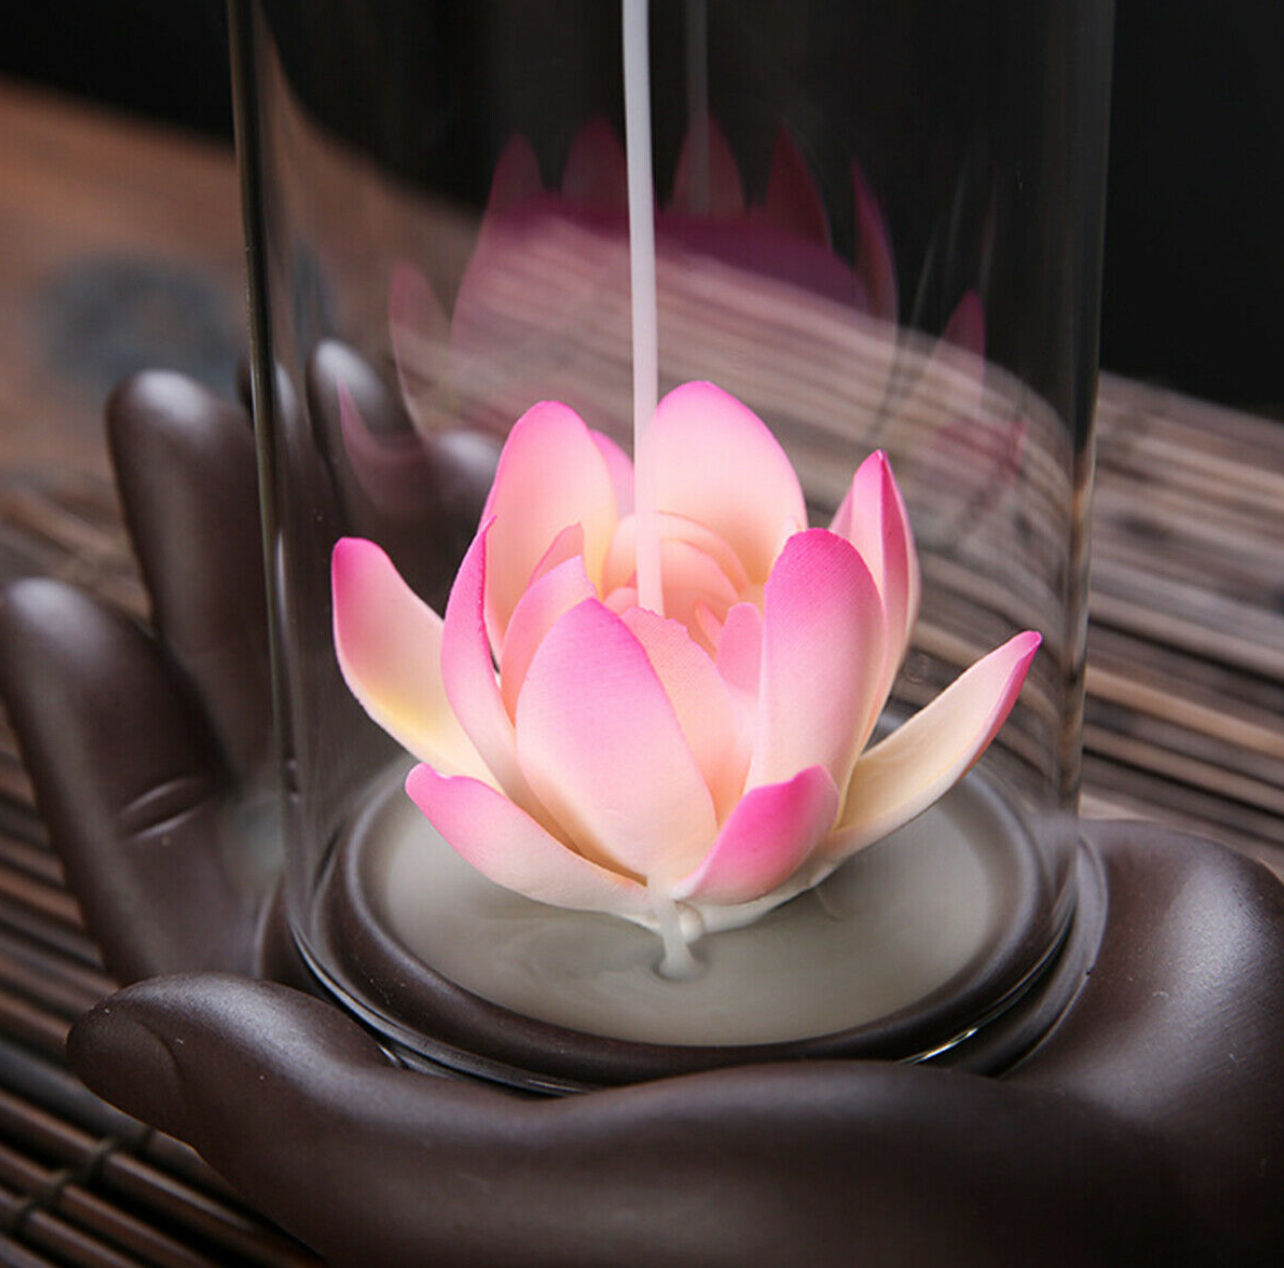 Bergamot Lotus Backflow Incense Burner - Shanghai stock